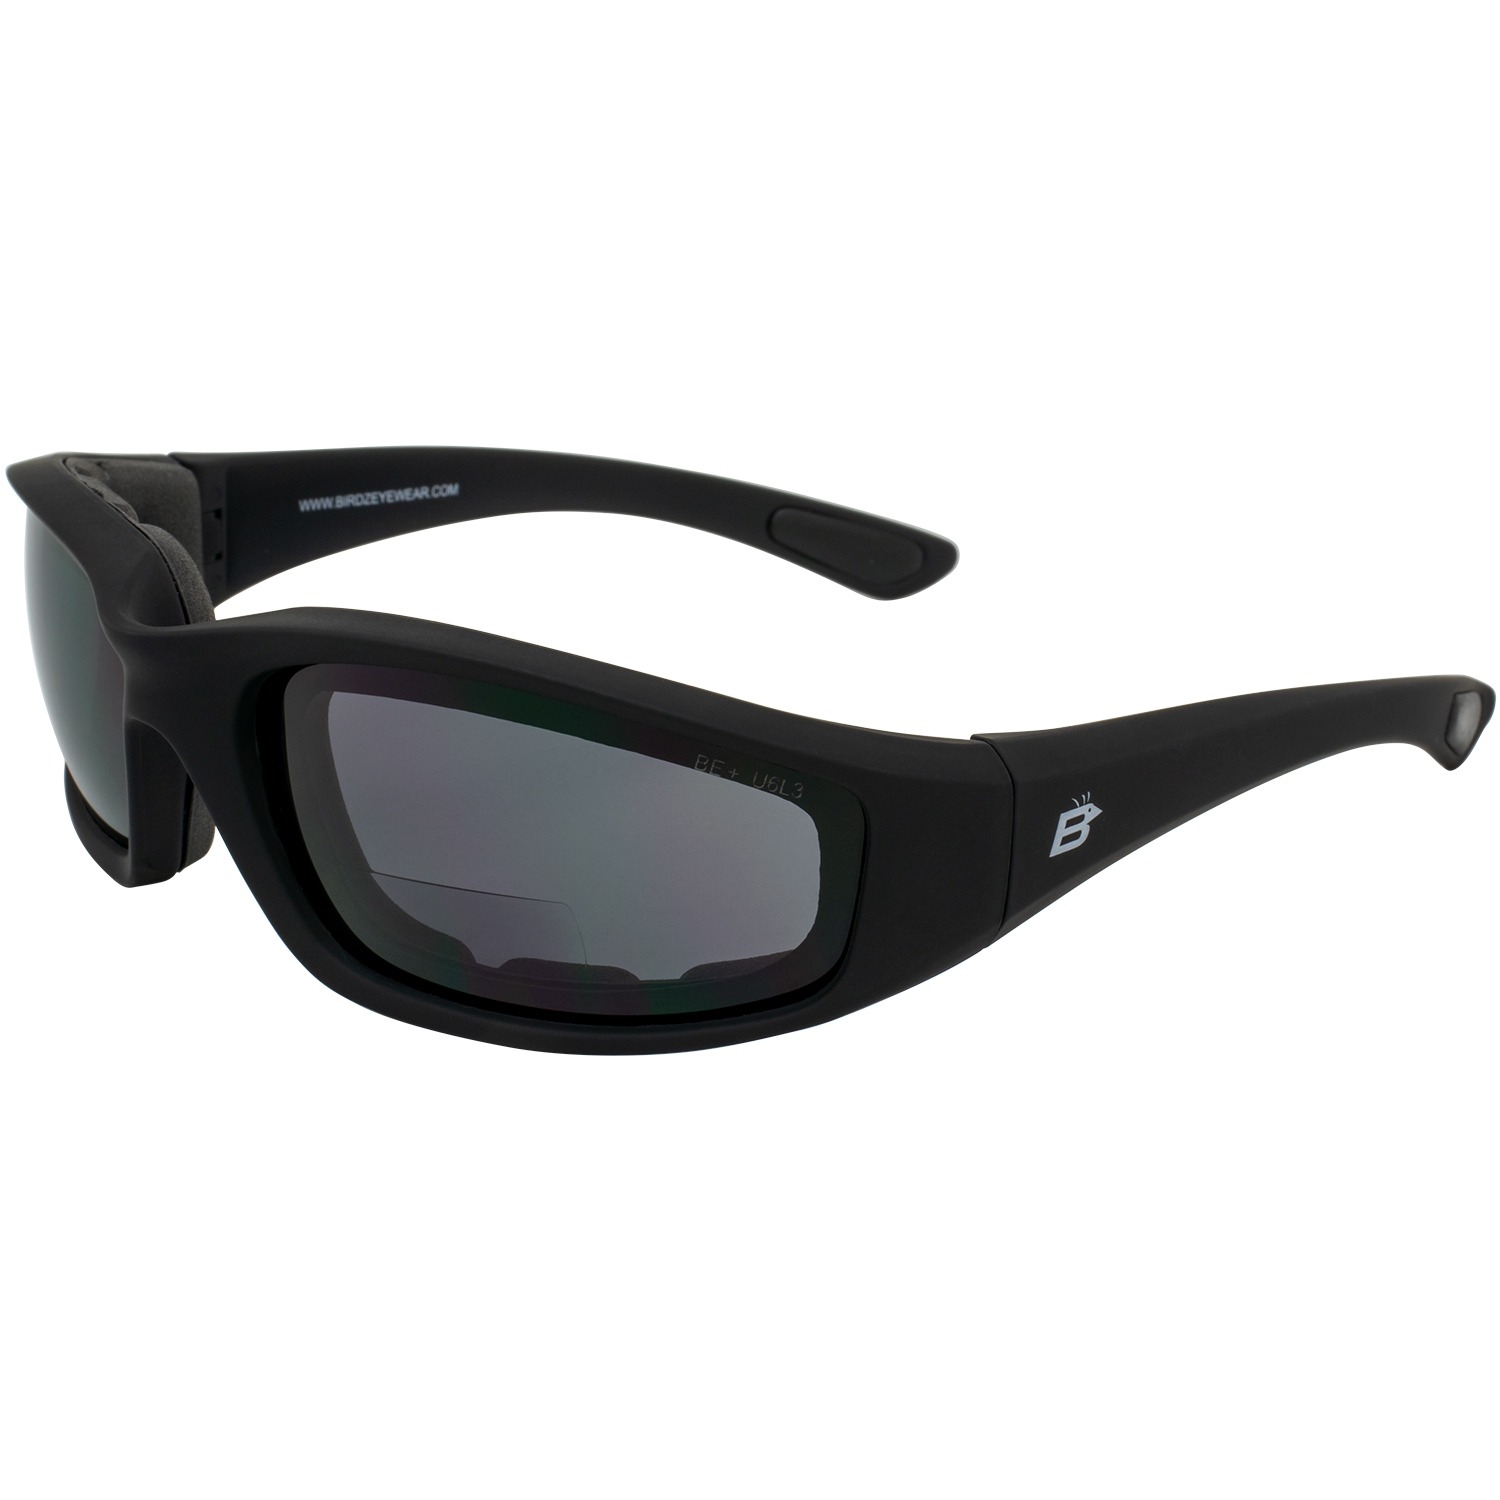 Birdz Eyewear Oriole Padded Safety Bifocal Motorcycle Glasses Black Frame Smok Lenses 2.5 Magnification Carry Bag